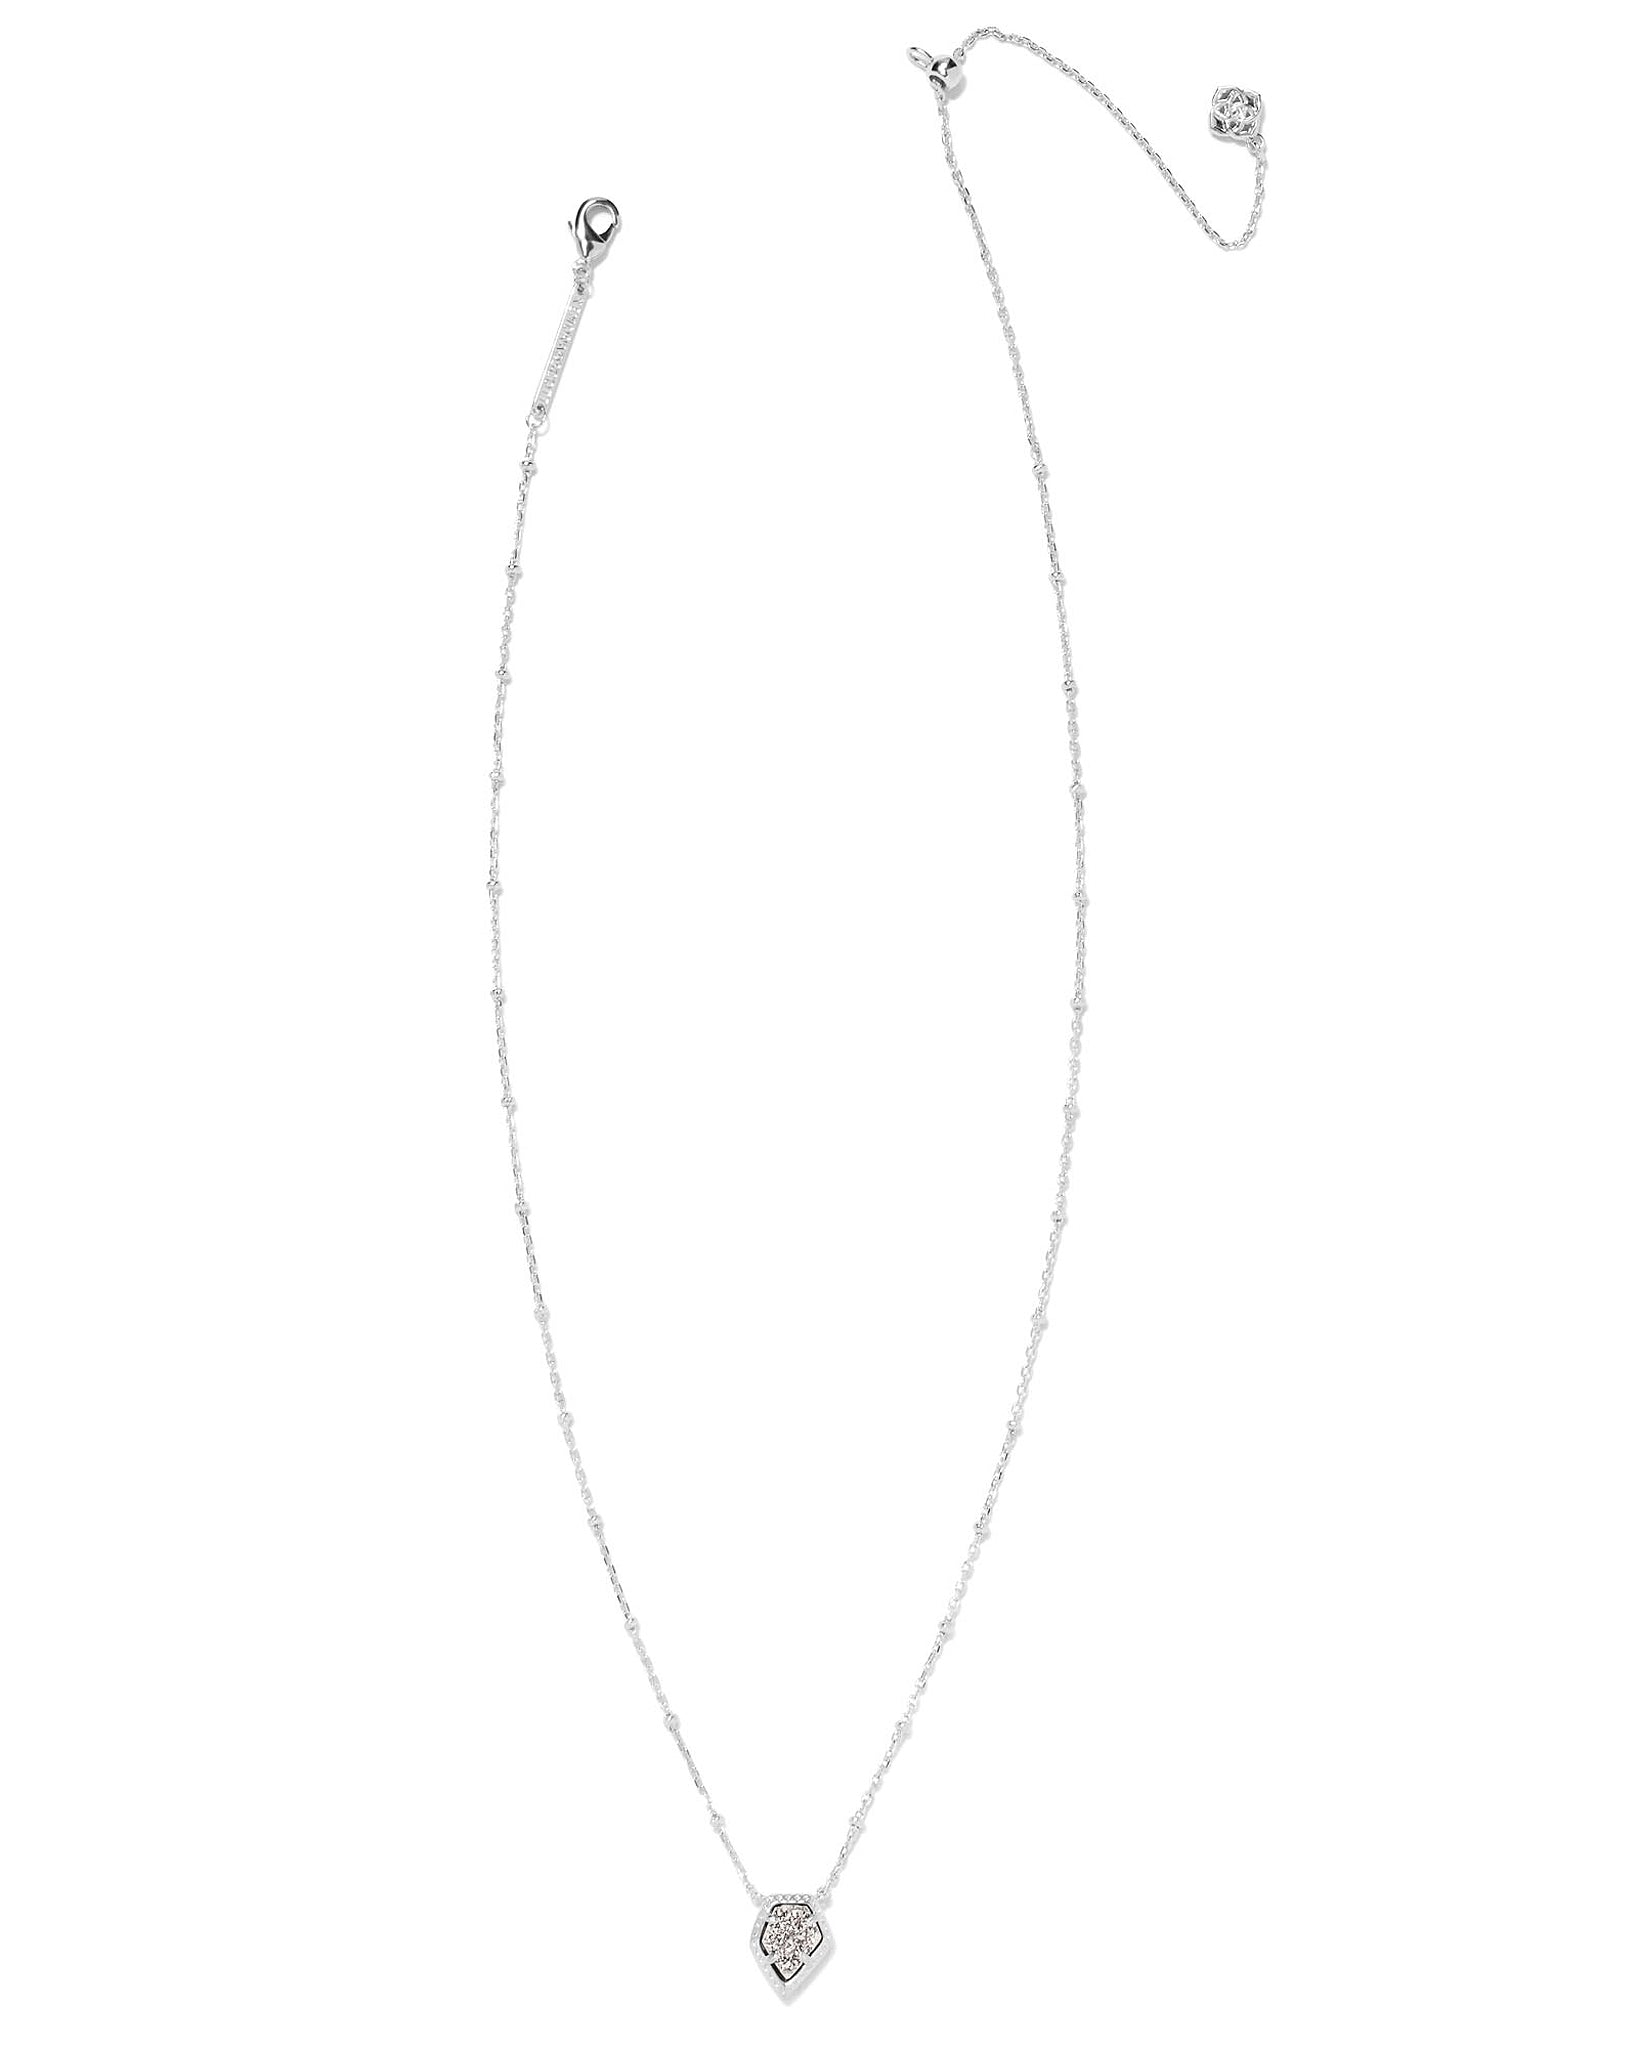 Kendra Scott Tessa Framed Satellite Chain Pendant Necklace in Platinum Drusy and Rhodium Plated